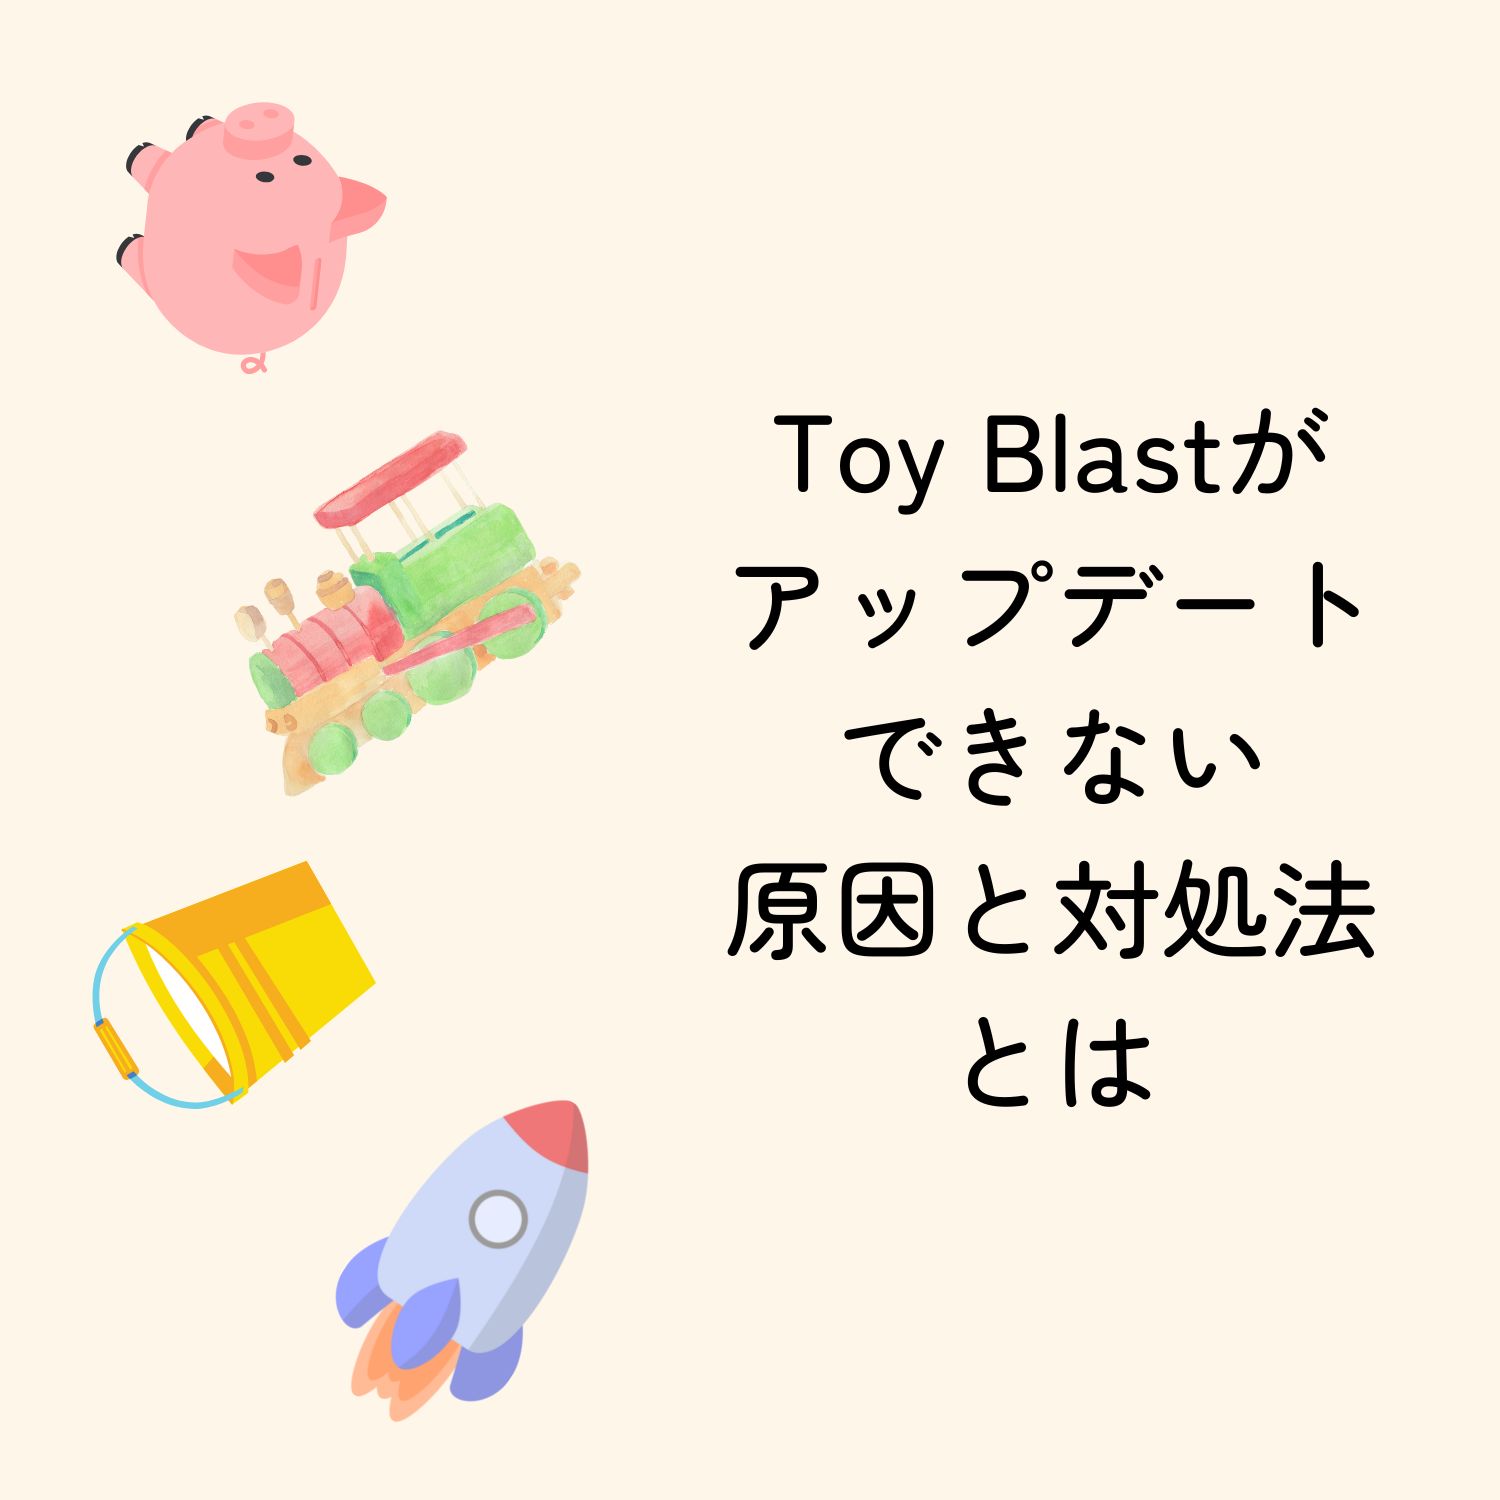 Toy Blast(トイブラスト)がアップデートできない原因と対処法とは